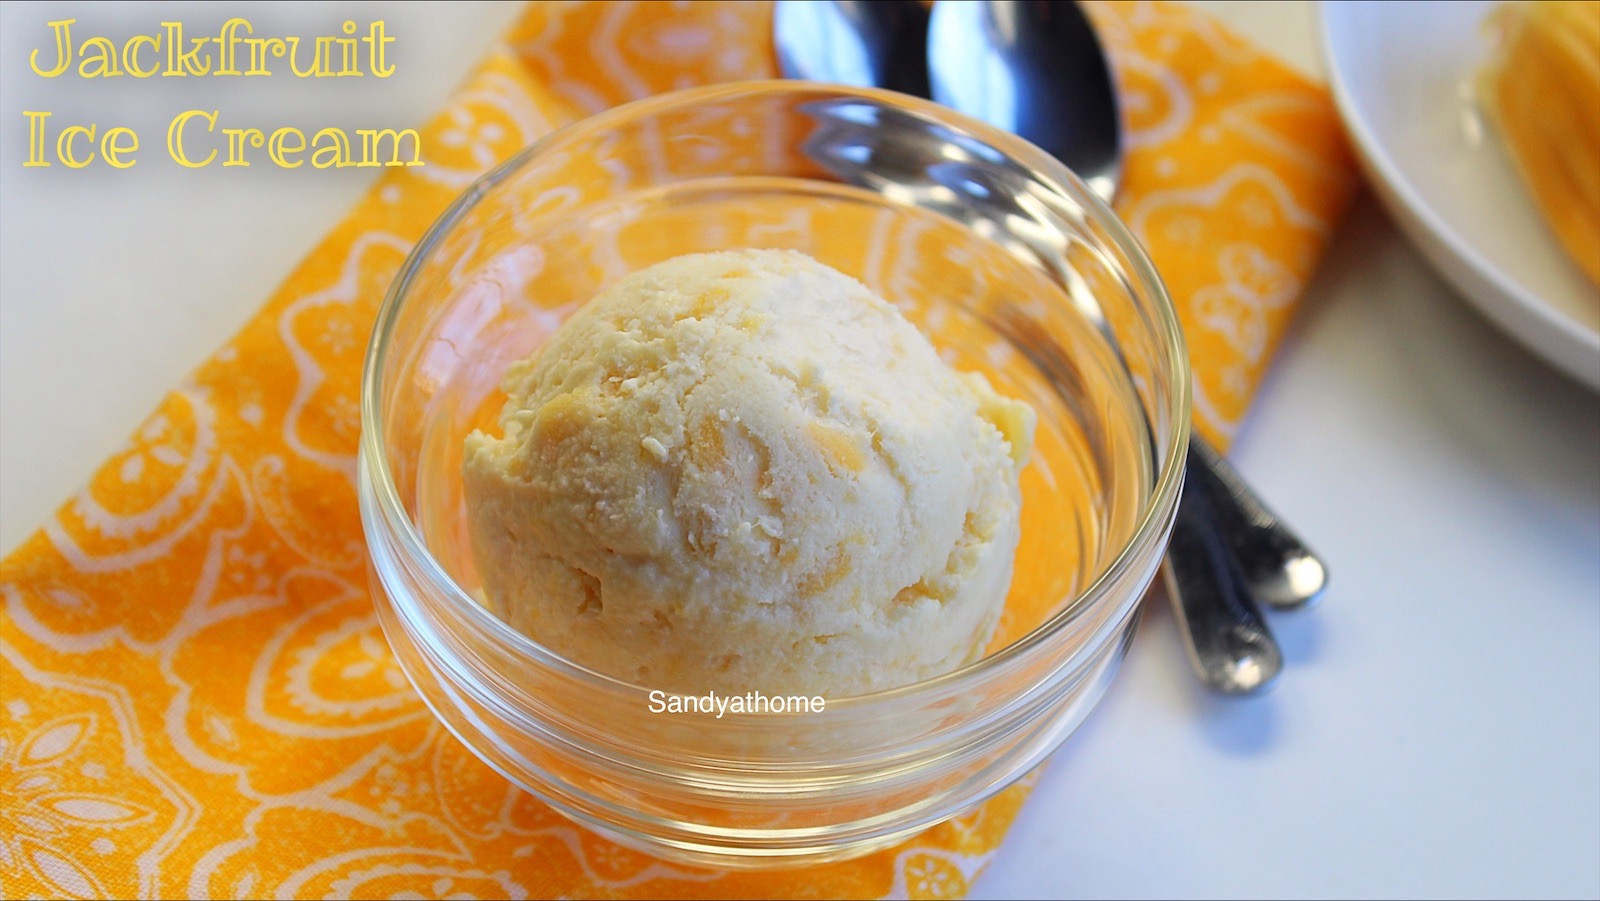 https://www.sandyathome.com/wp-content/uploads/2020/07/jackfruit-ice-cream.jpg